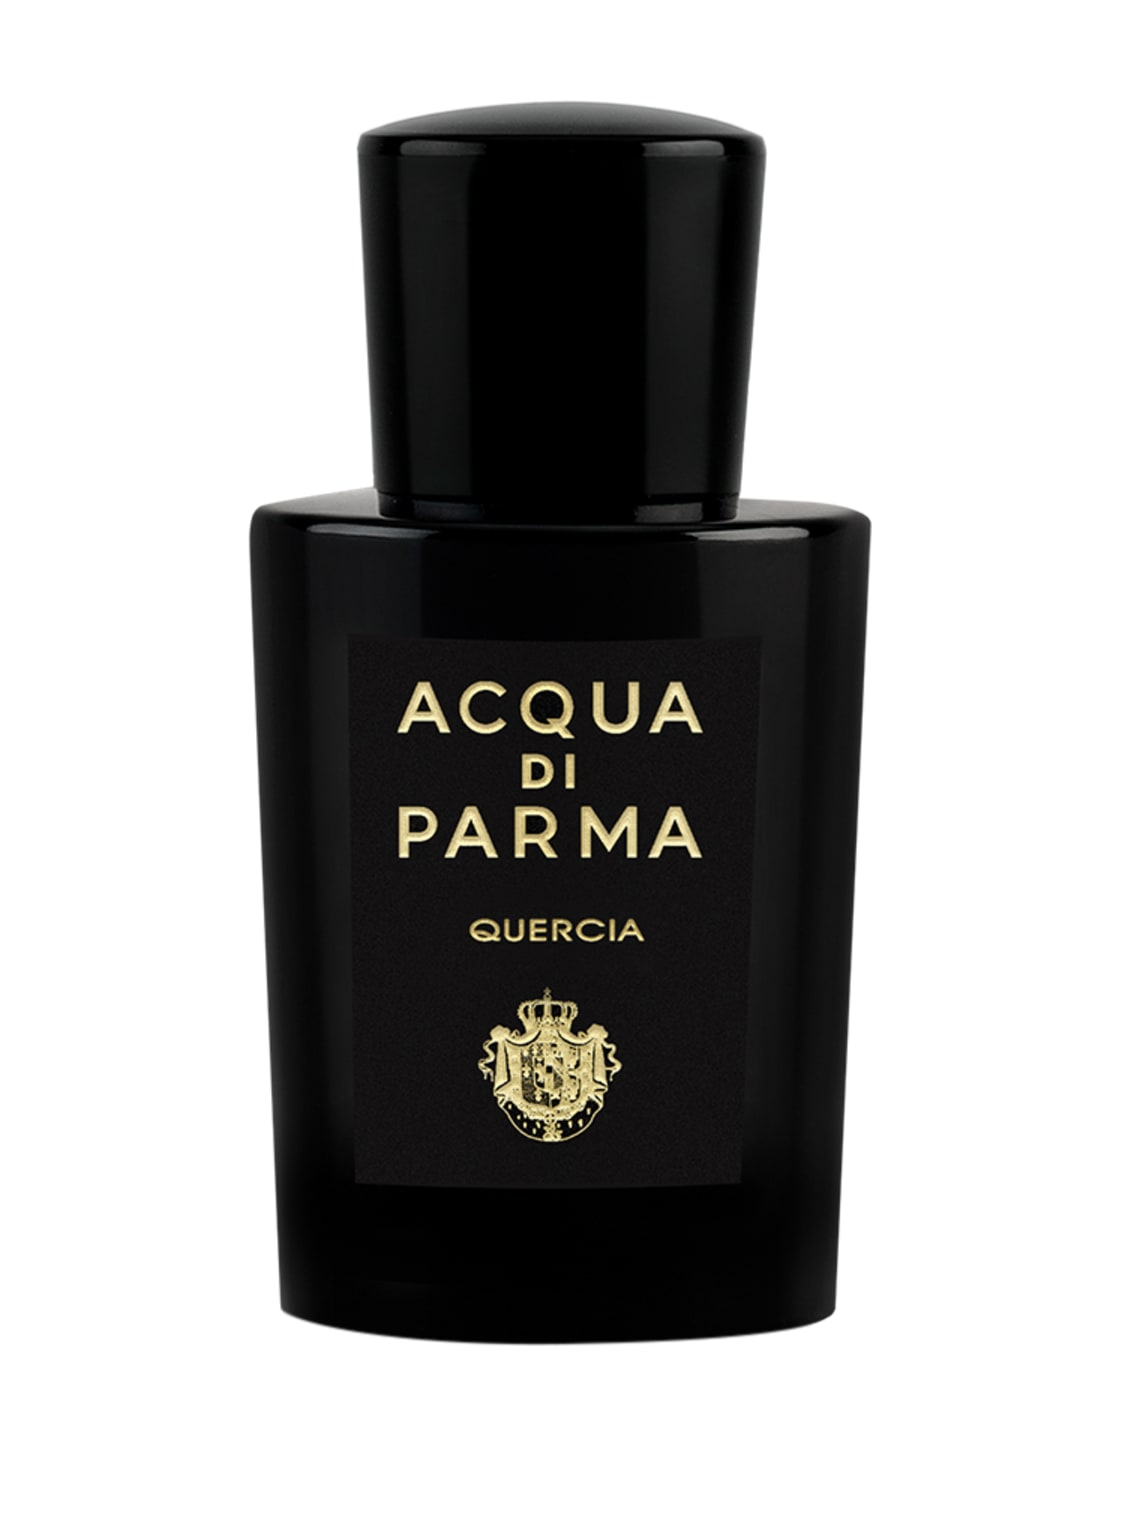 Acqua Di Parma Quercia Eau de Parfum 20 ml von Acqua Di Parma